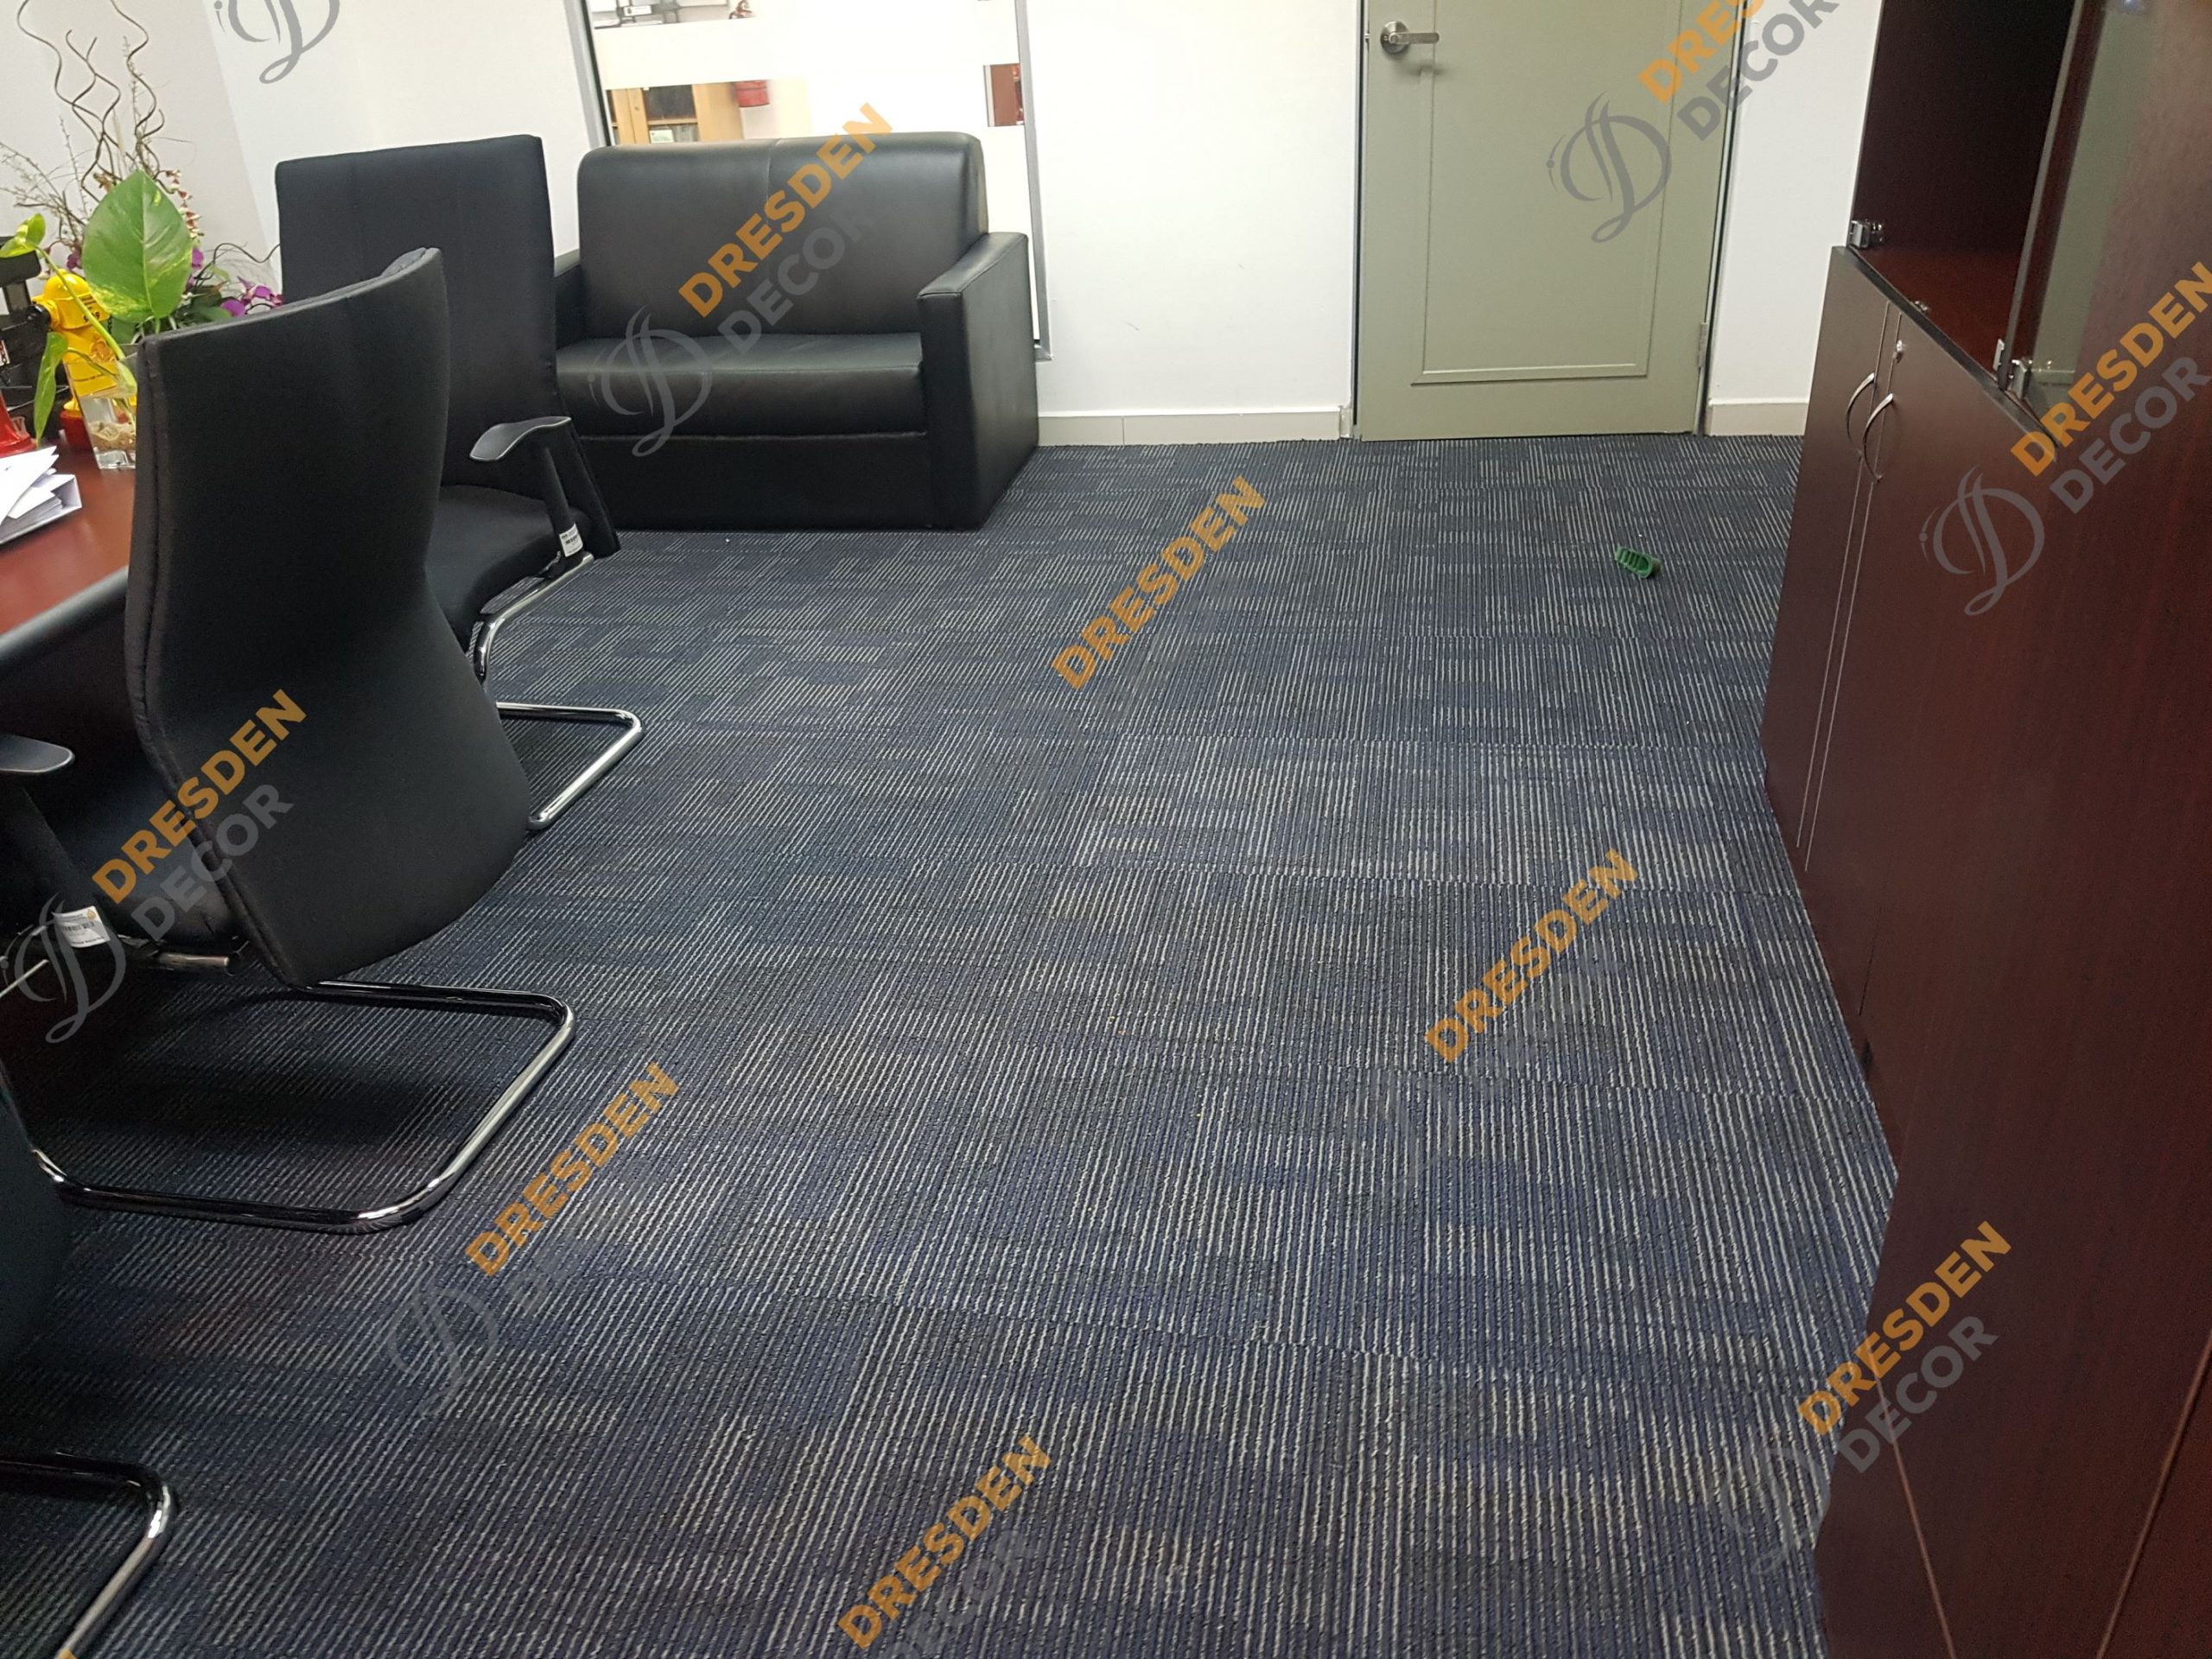 PUSPEK (Pusat Penyelidikan Kebombaan) – Carpet Tiles